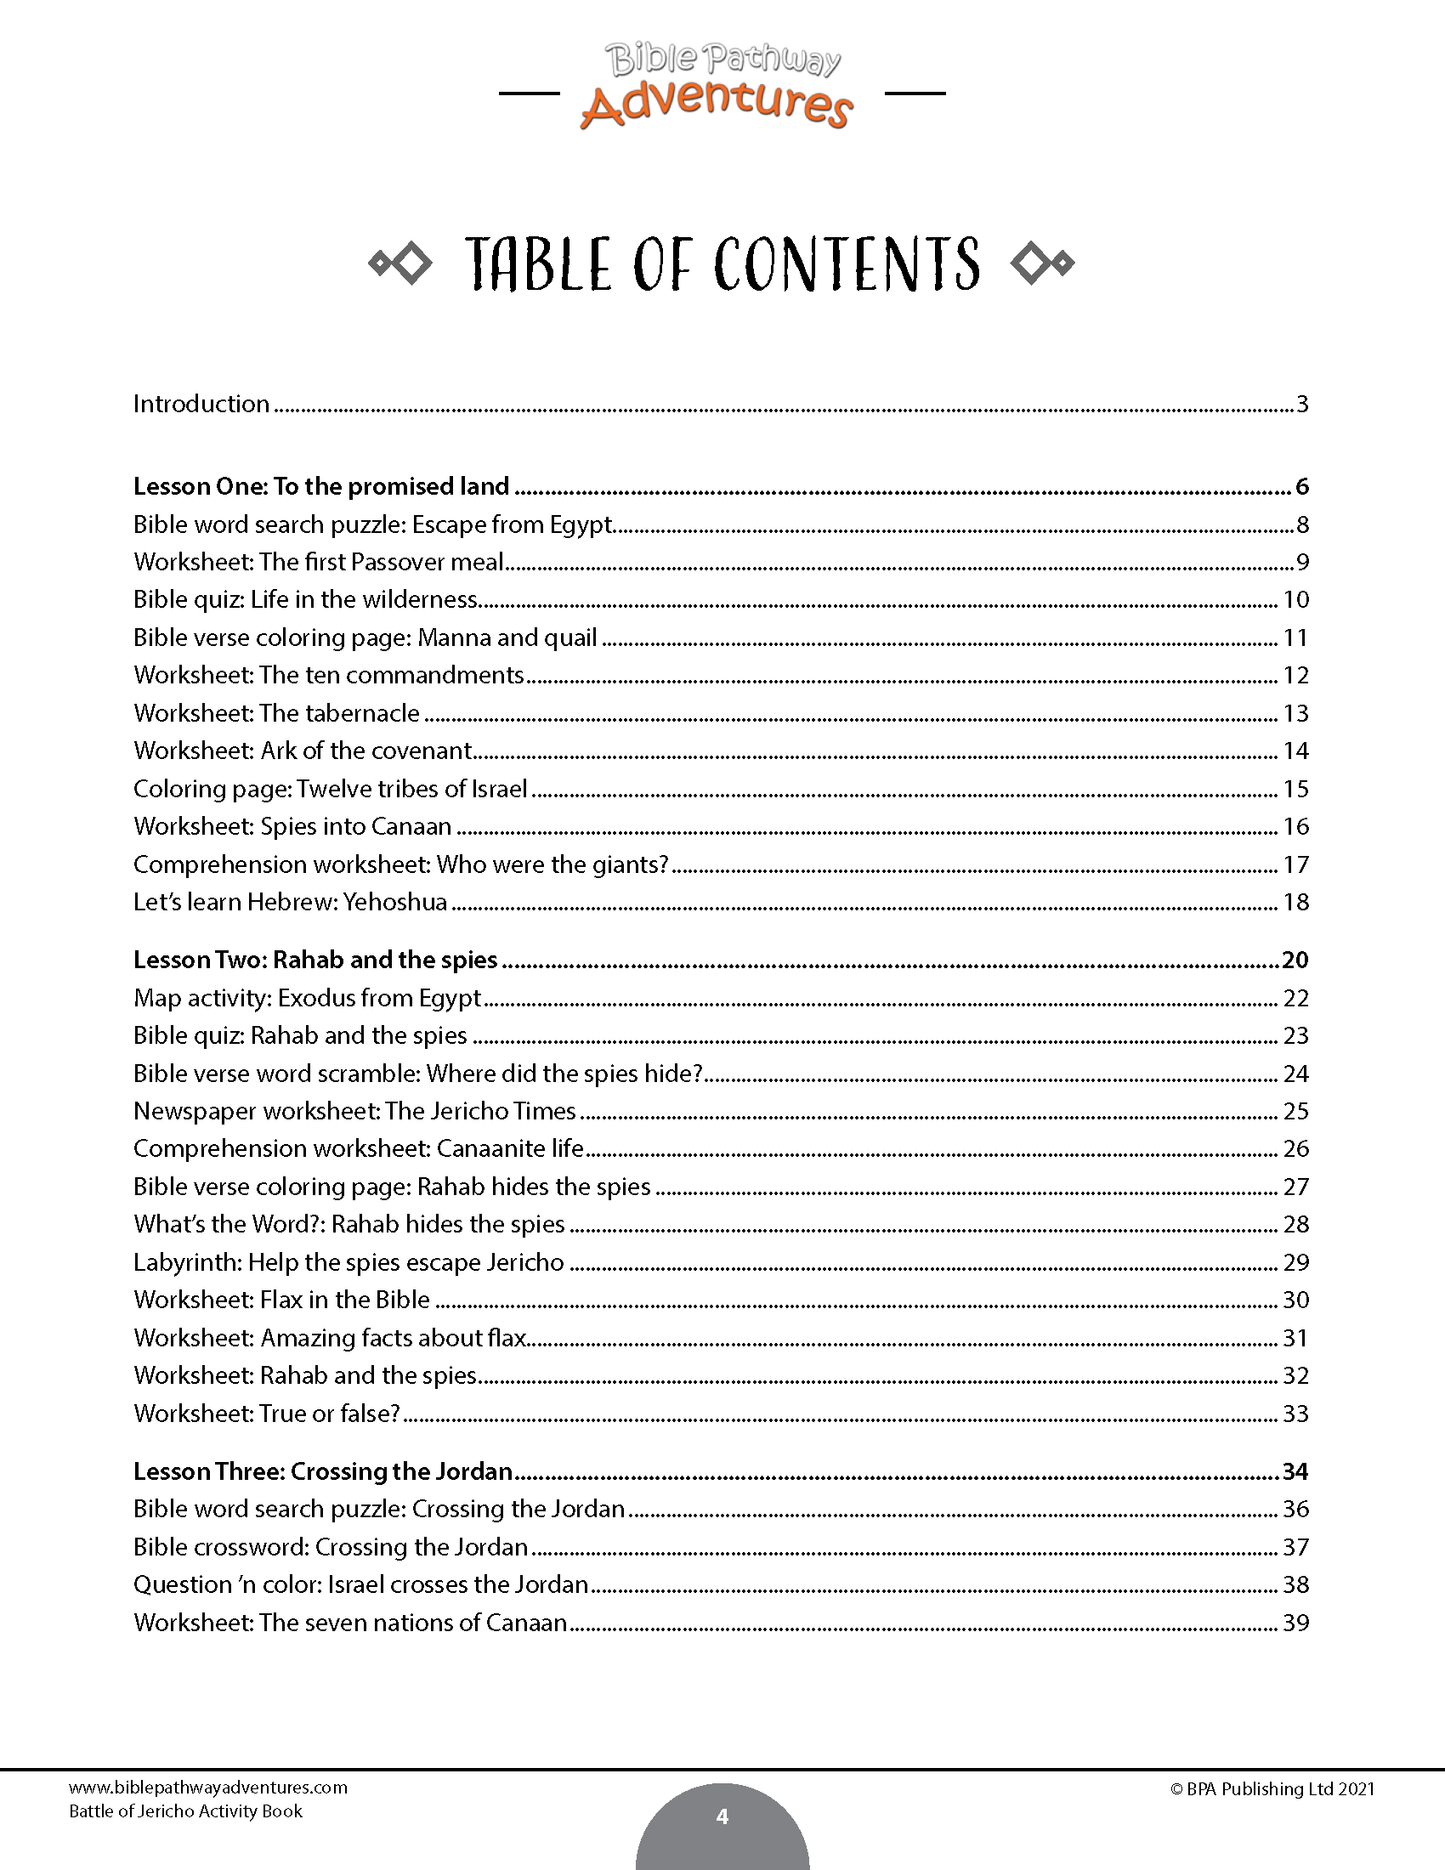 Battle of Jericho Activity Book (PDF)